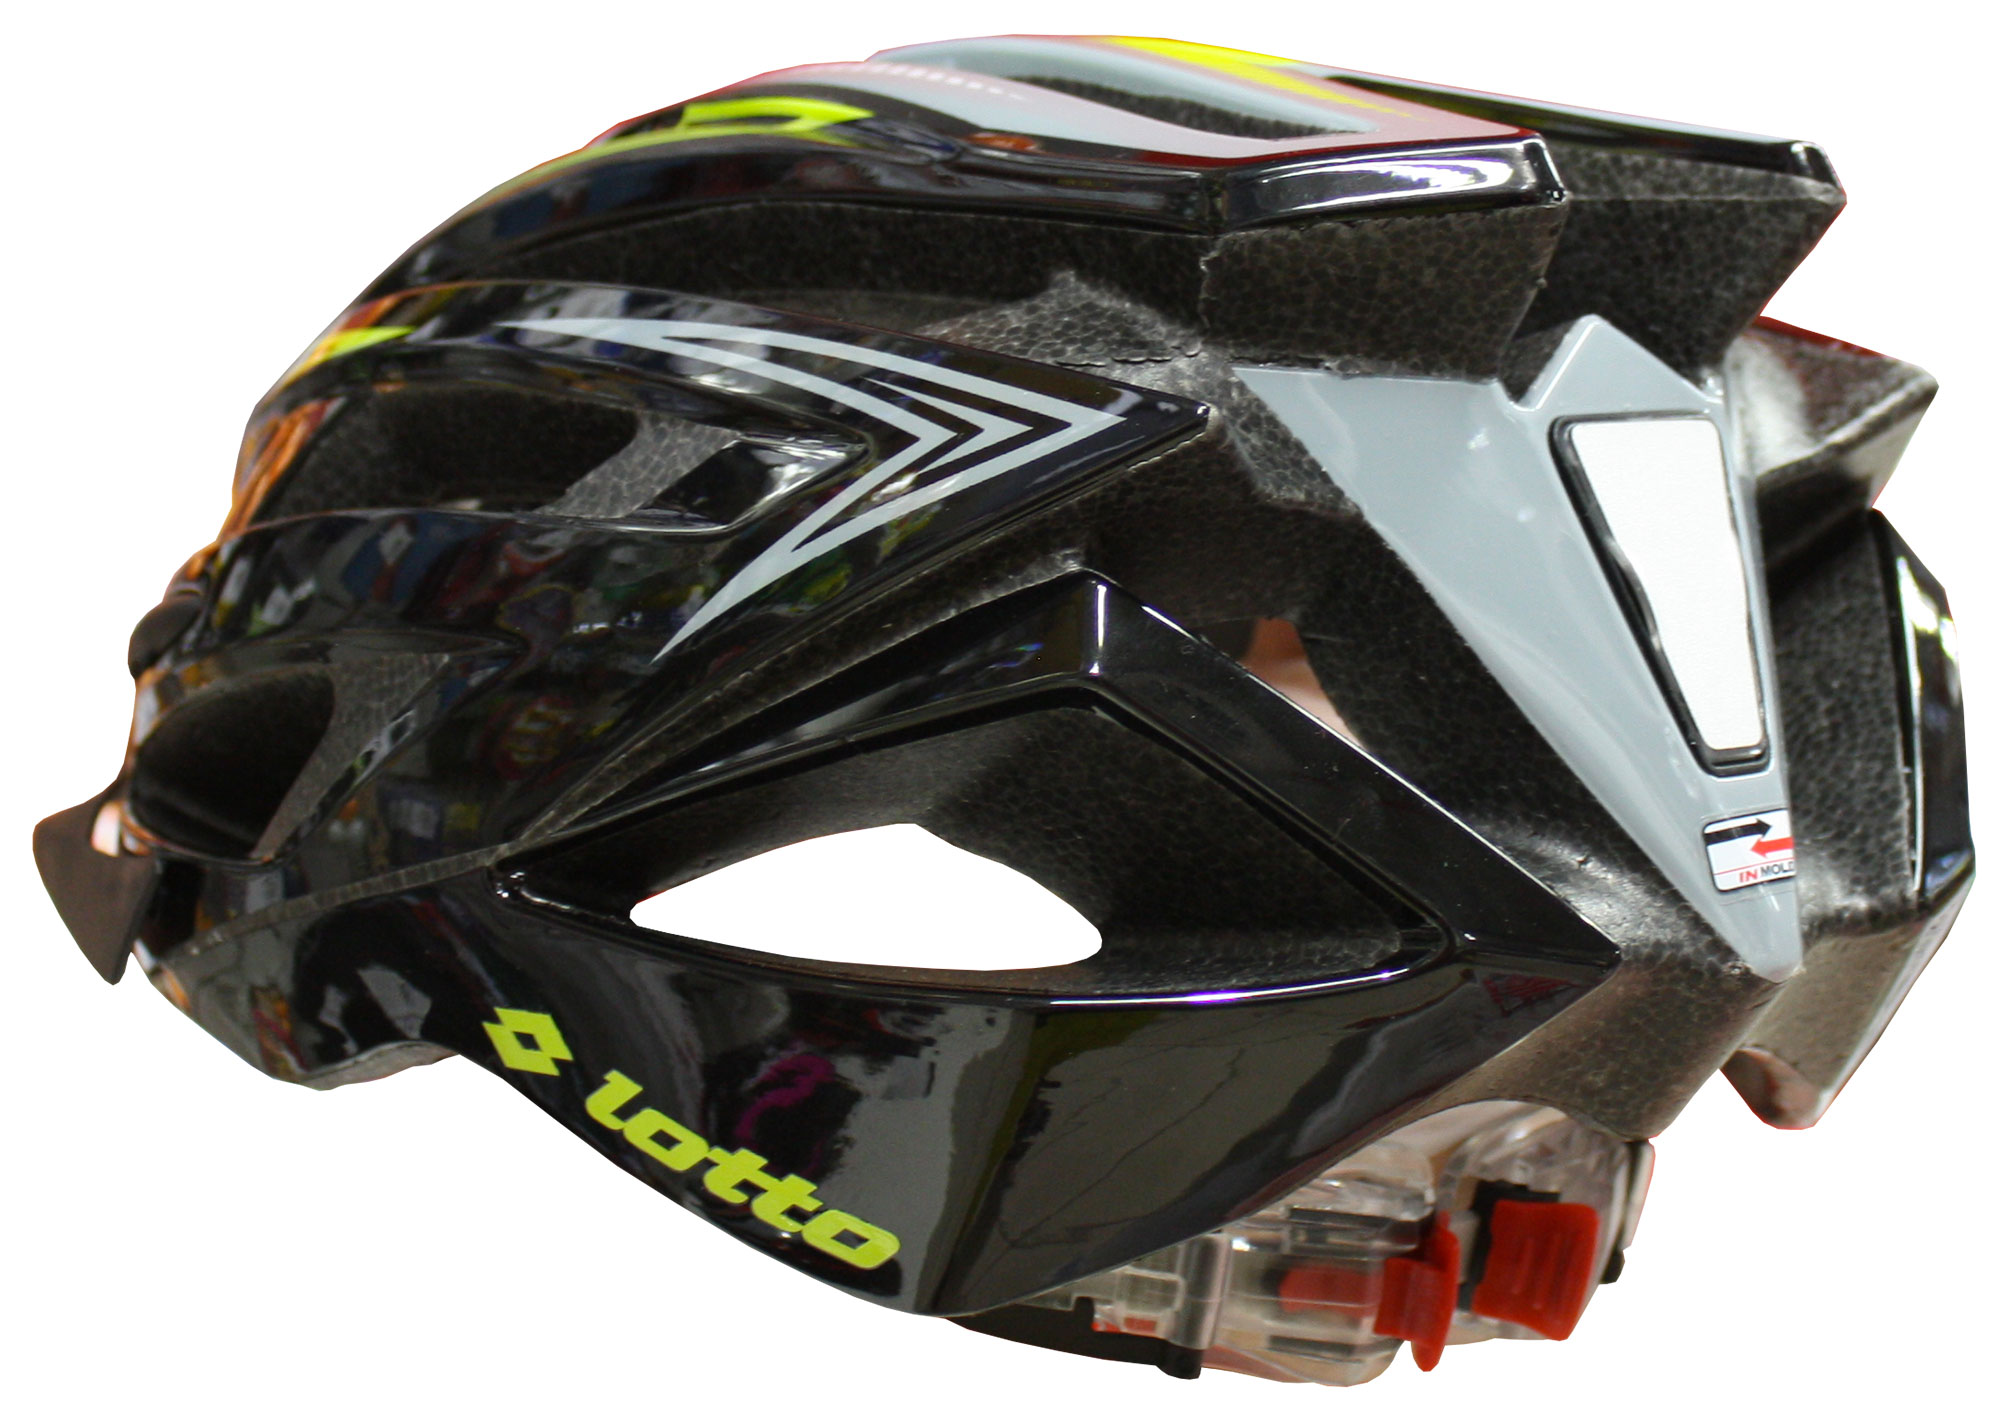 S-55 - Cyklistická helma